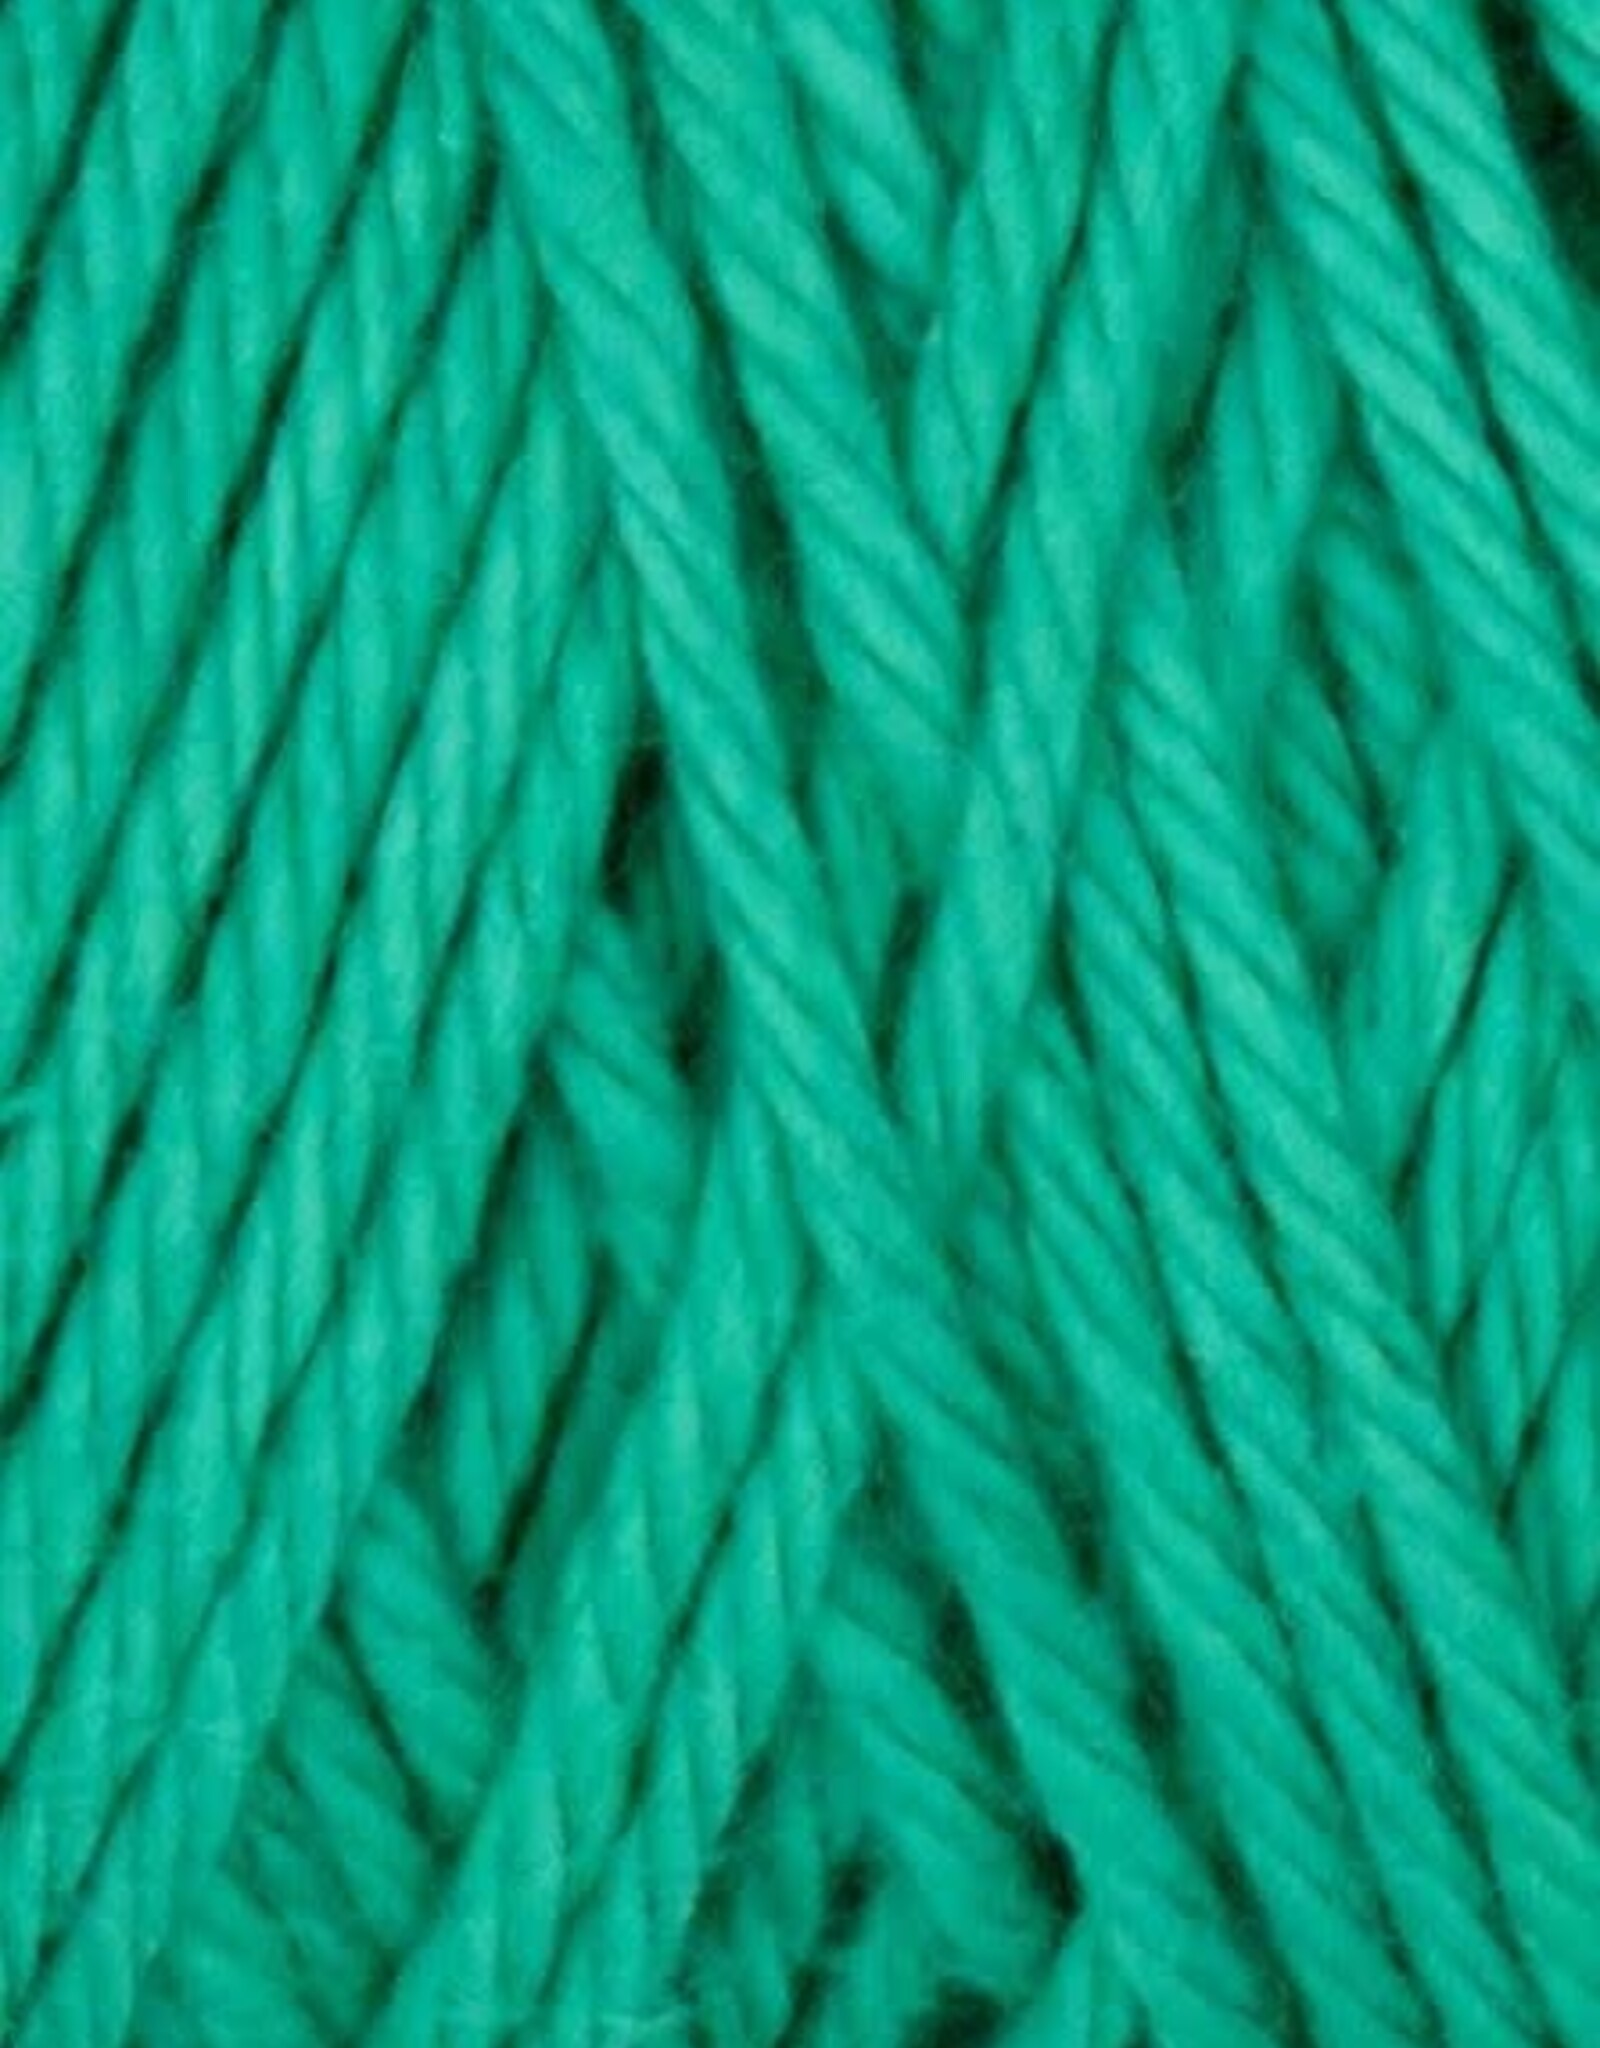 Queensland Coastal Cotton 100g #1050 Turquoise